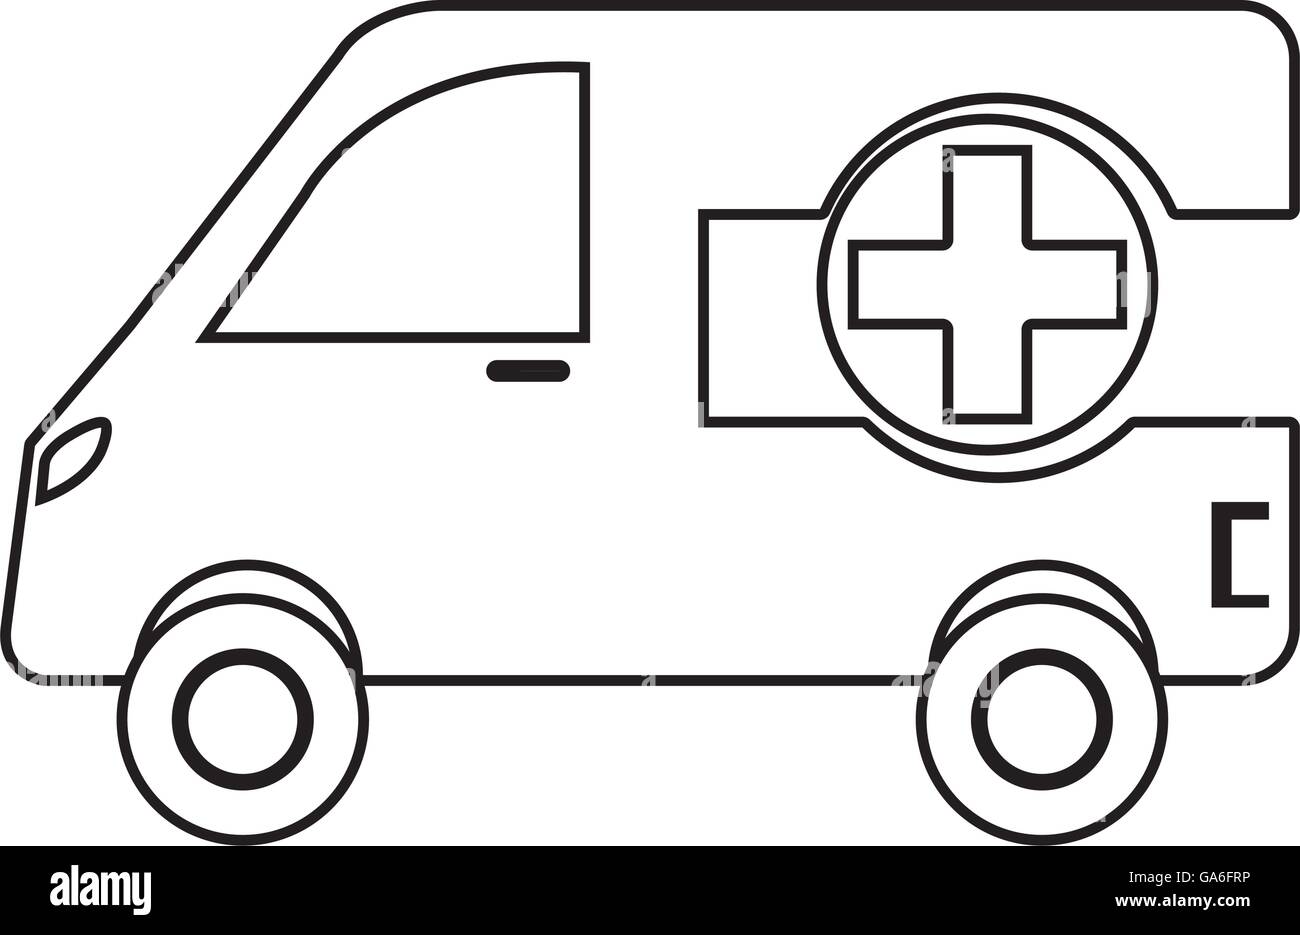 Ambulance emergency vehicle with cross symbol Stock Vector